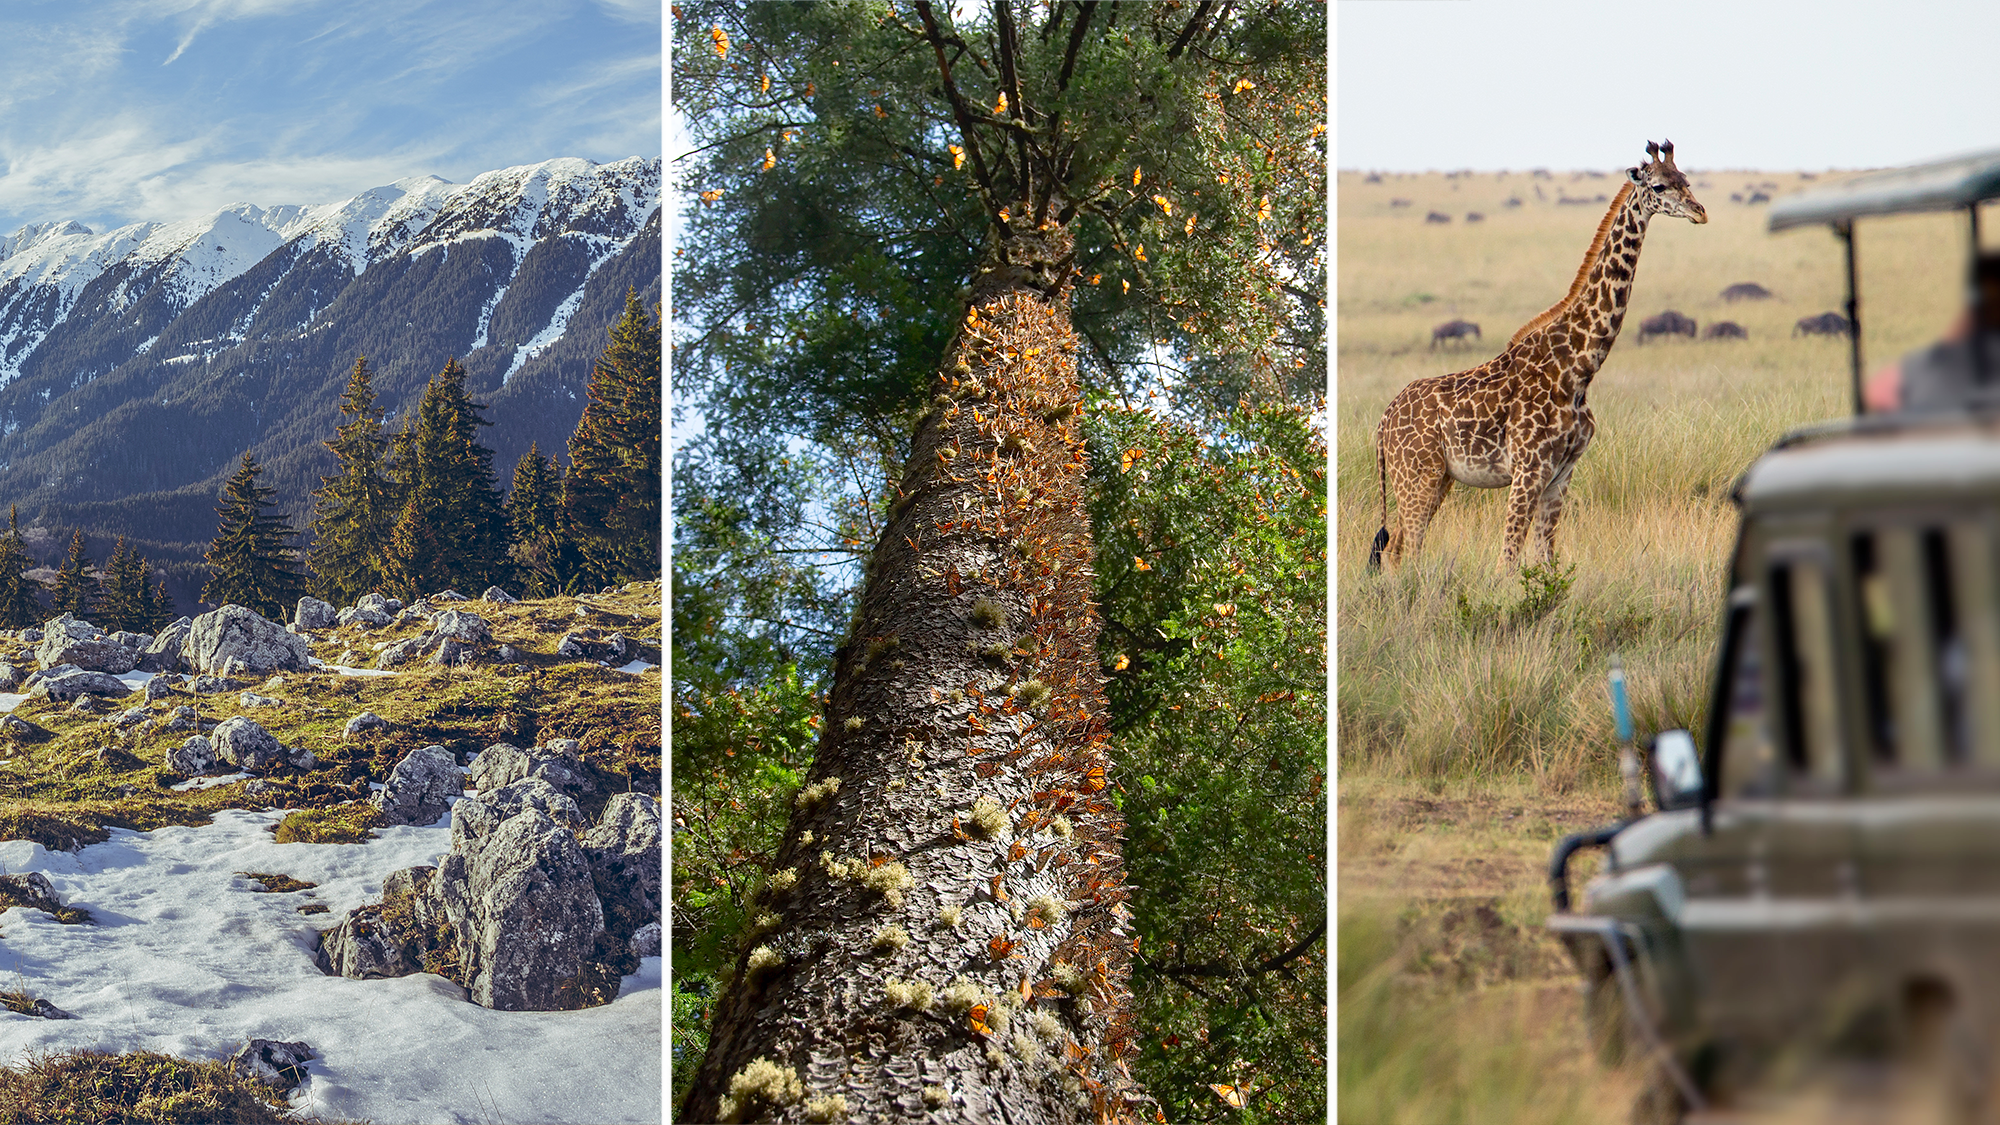 Zanoaga meadow in Romania, hundreds of monarch butterflies in Michoacán, Mexico, and a giraffe seen on safari in Tanzania. 